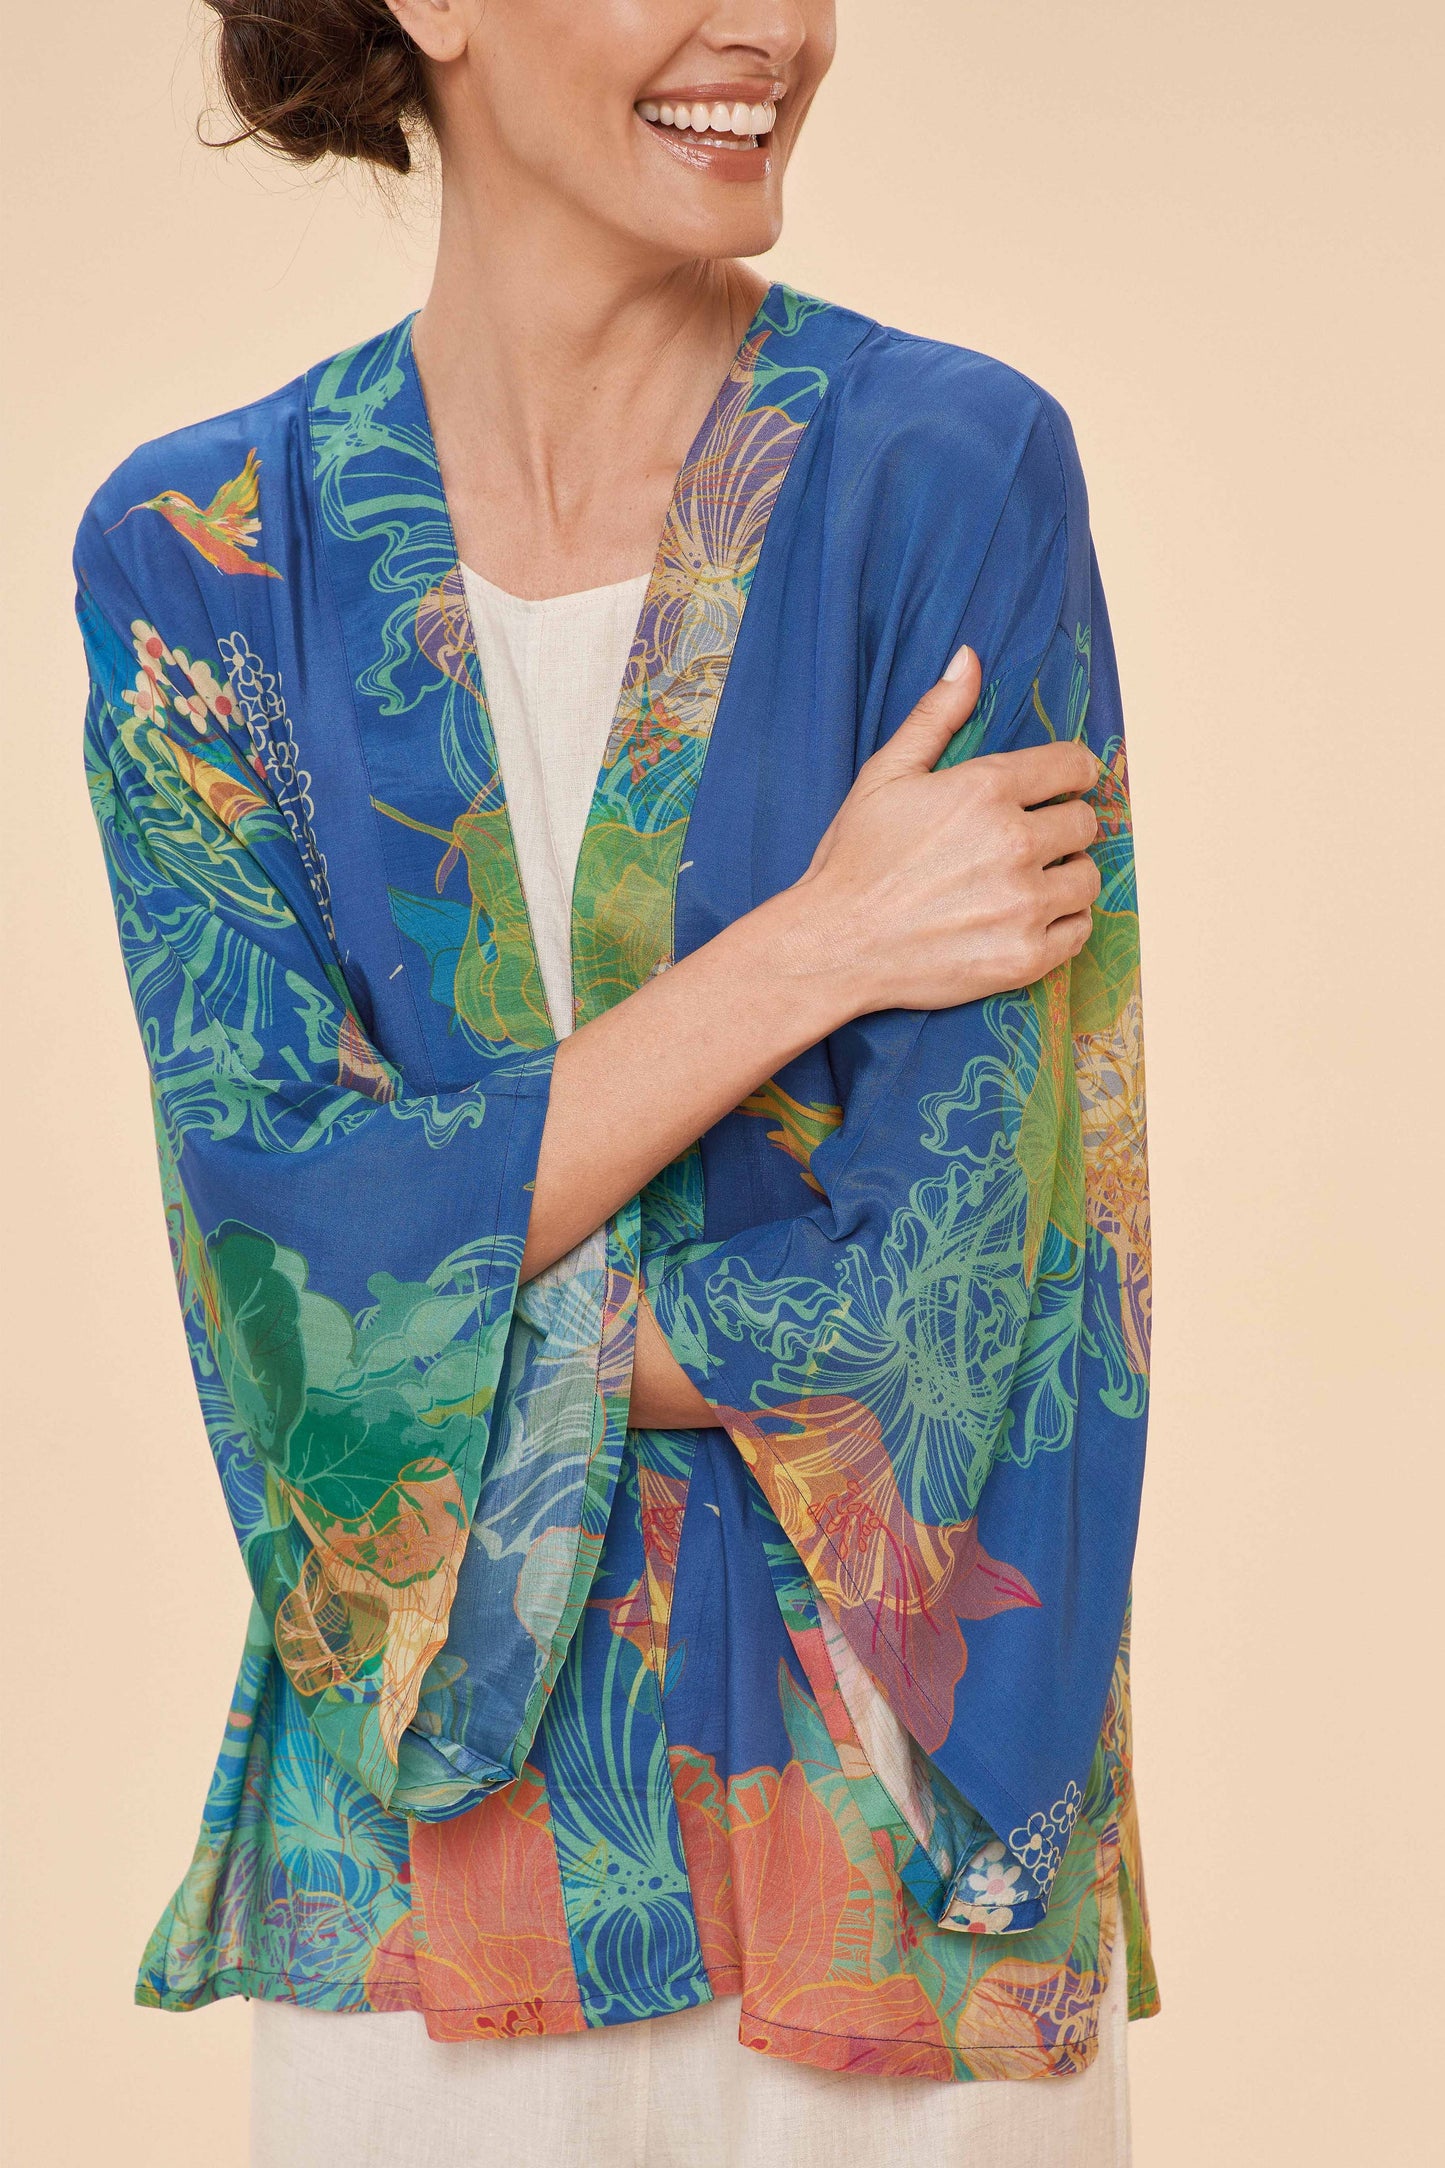 Powder Design inc - Hummingbird Kimono Jacket in Denim